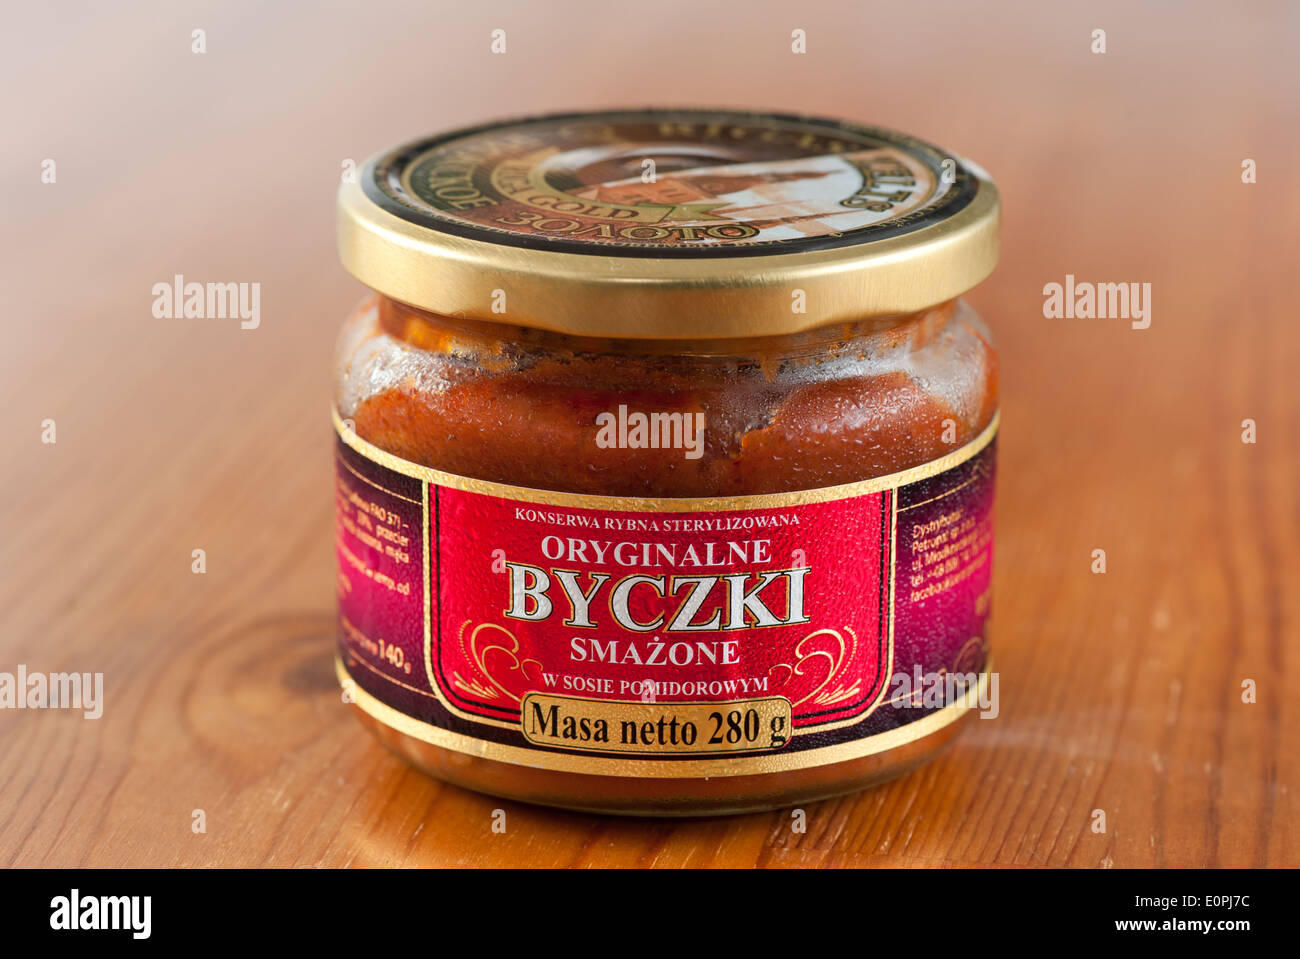 Byczki fish dish canned in glass jar Stock Photo